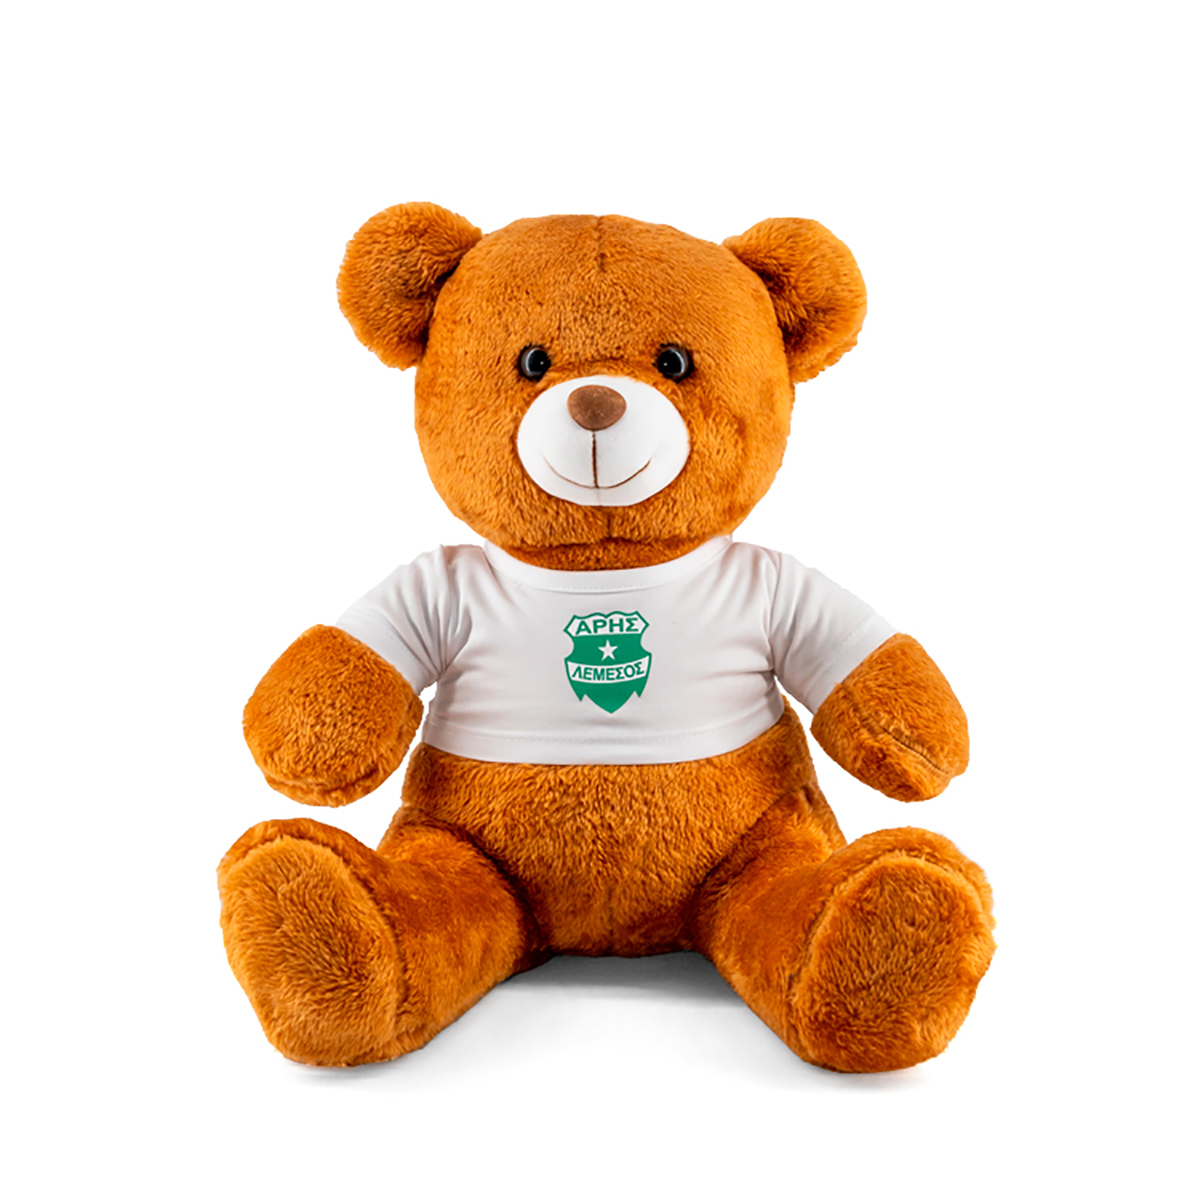 Teddy Bear Big